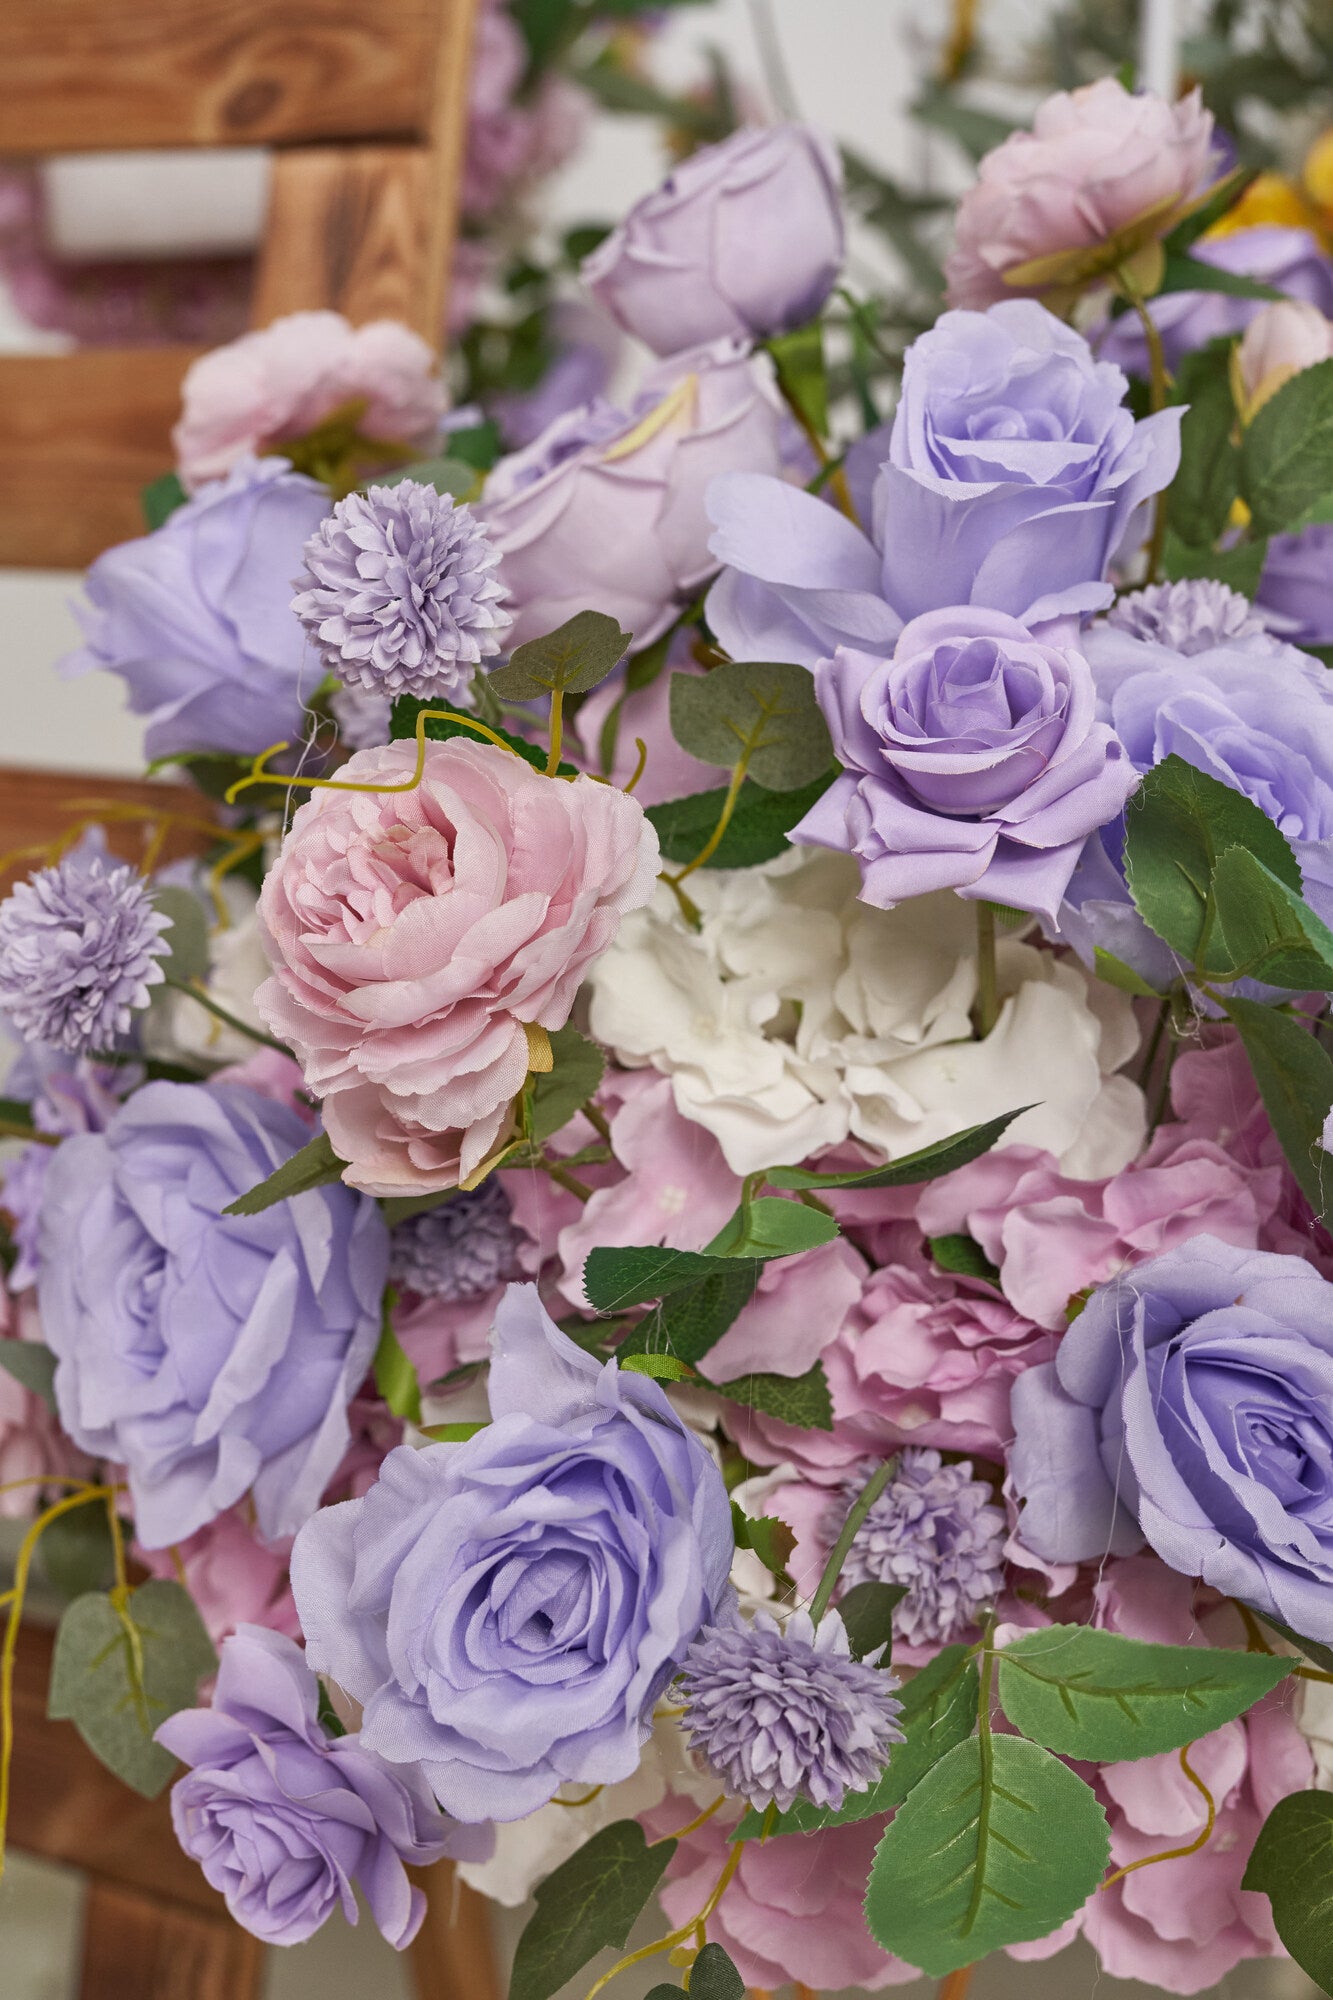 Flower Ball Retro Purple Rose Wedding Proposal Party Centerpieces Decor